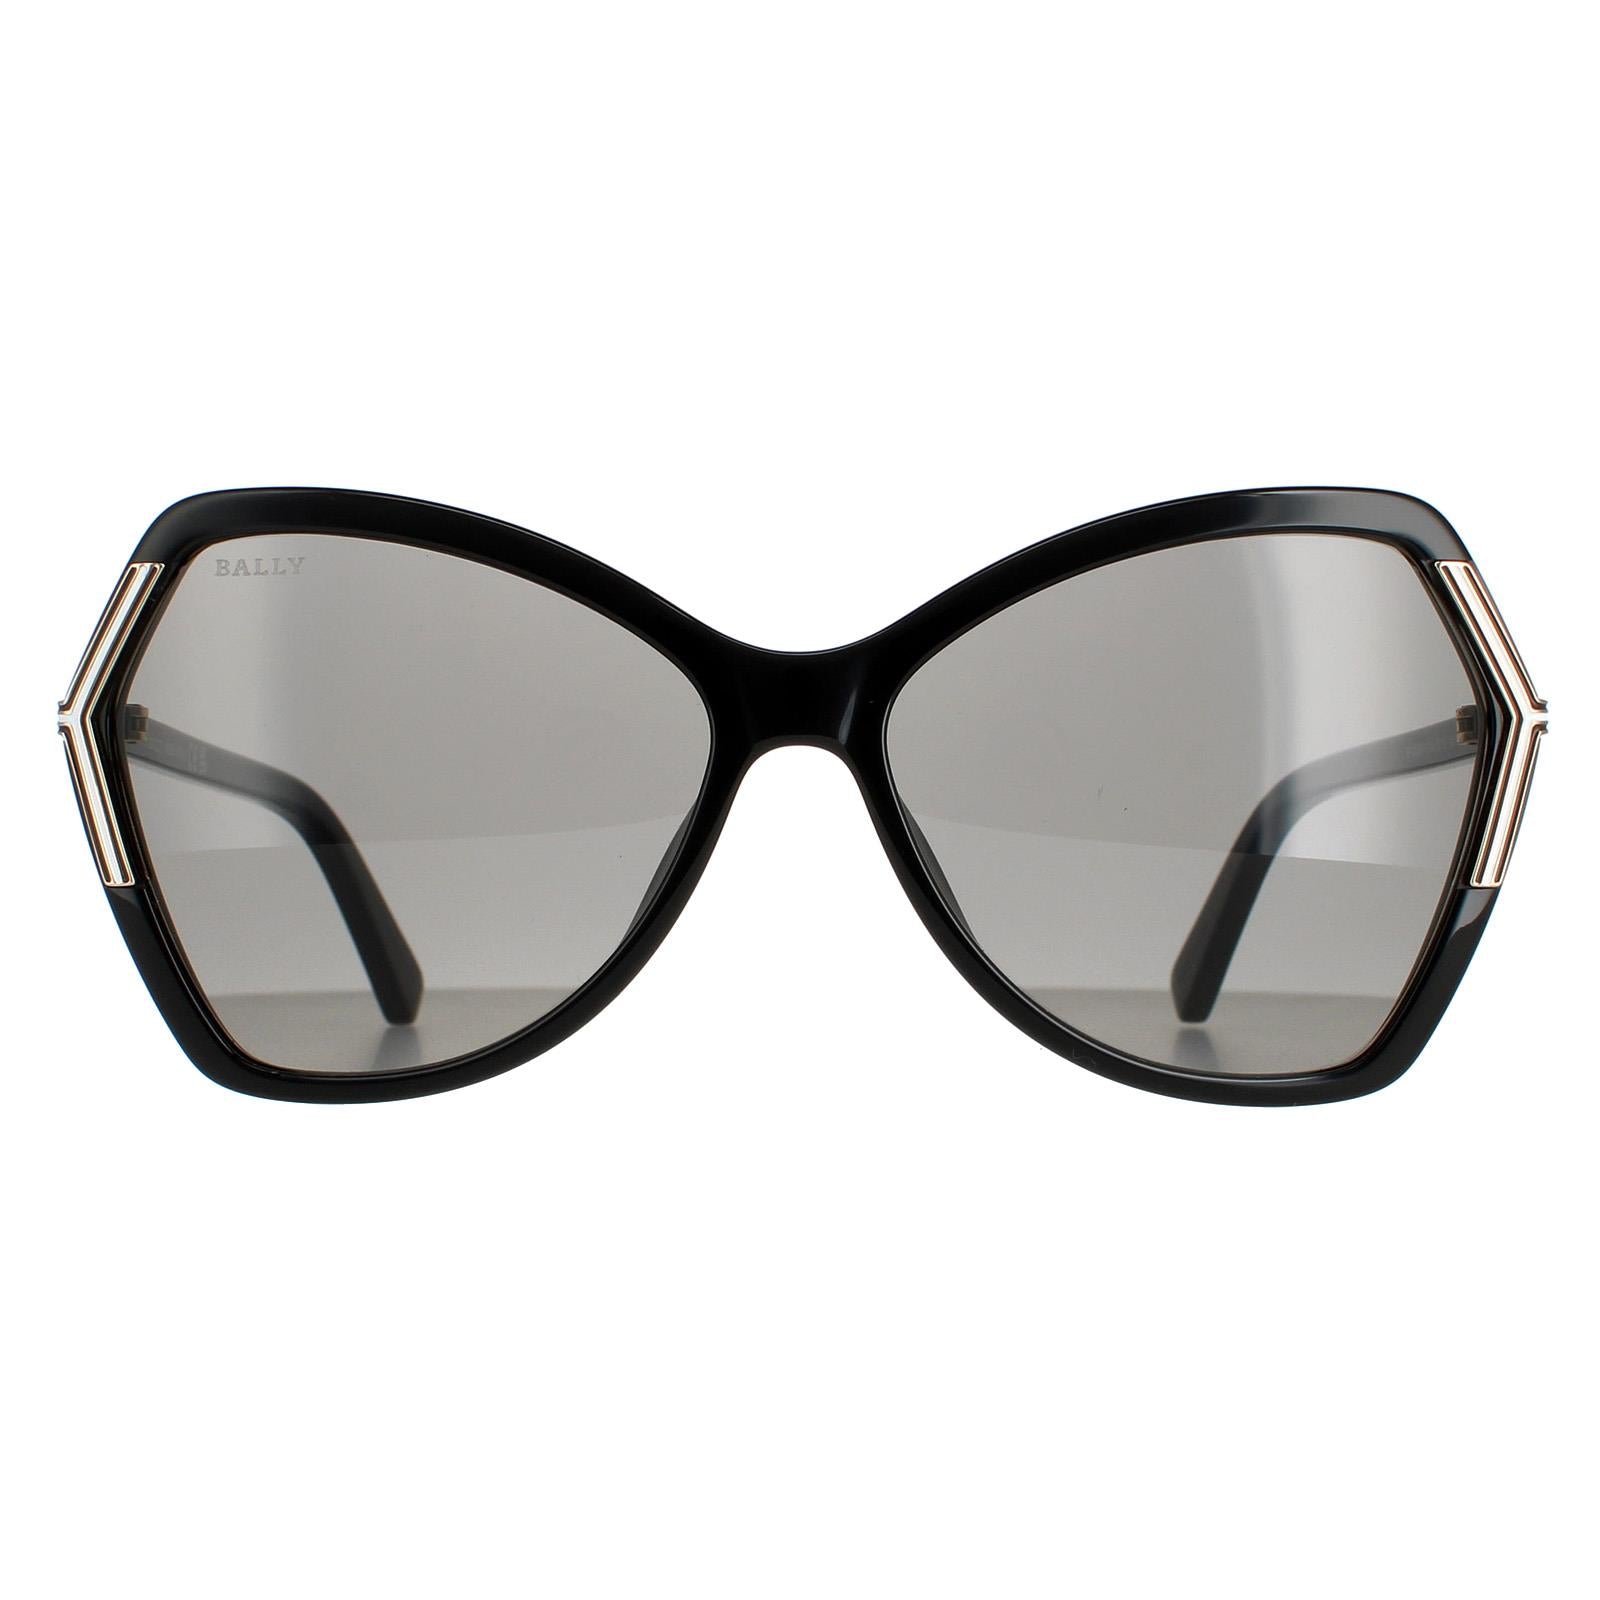 Bally BY 0072-H 85Z 59 Women sunglasses - Contact lenses, su